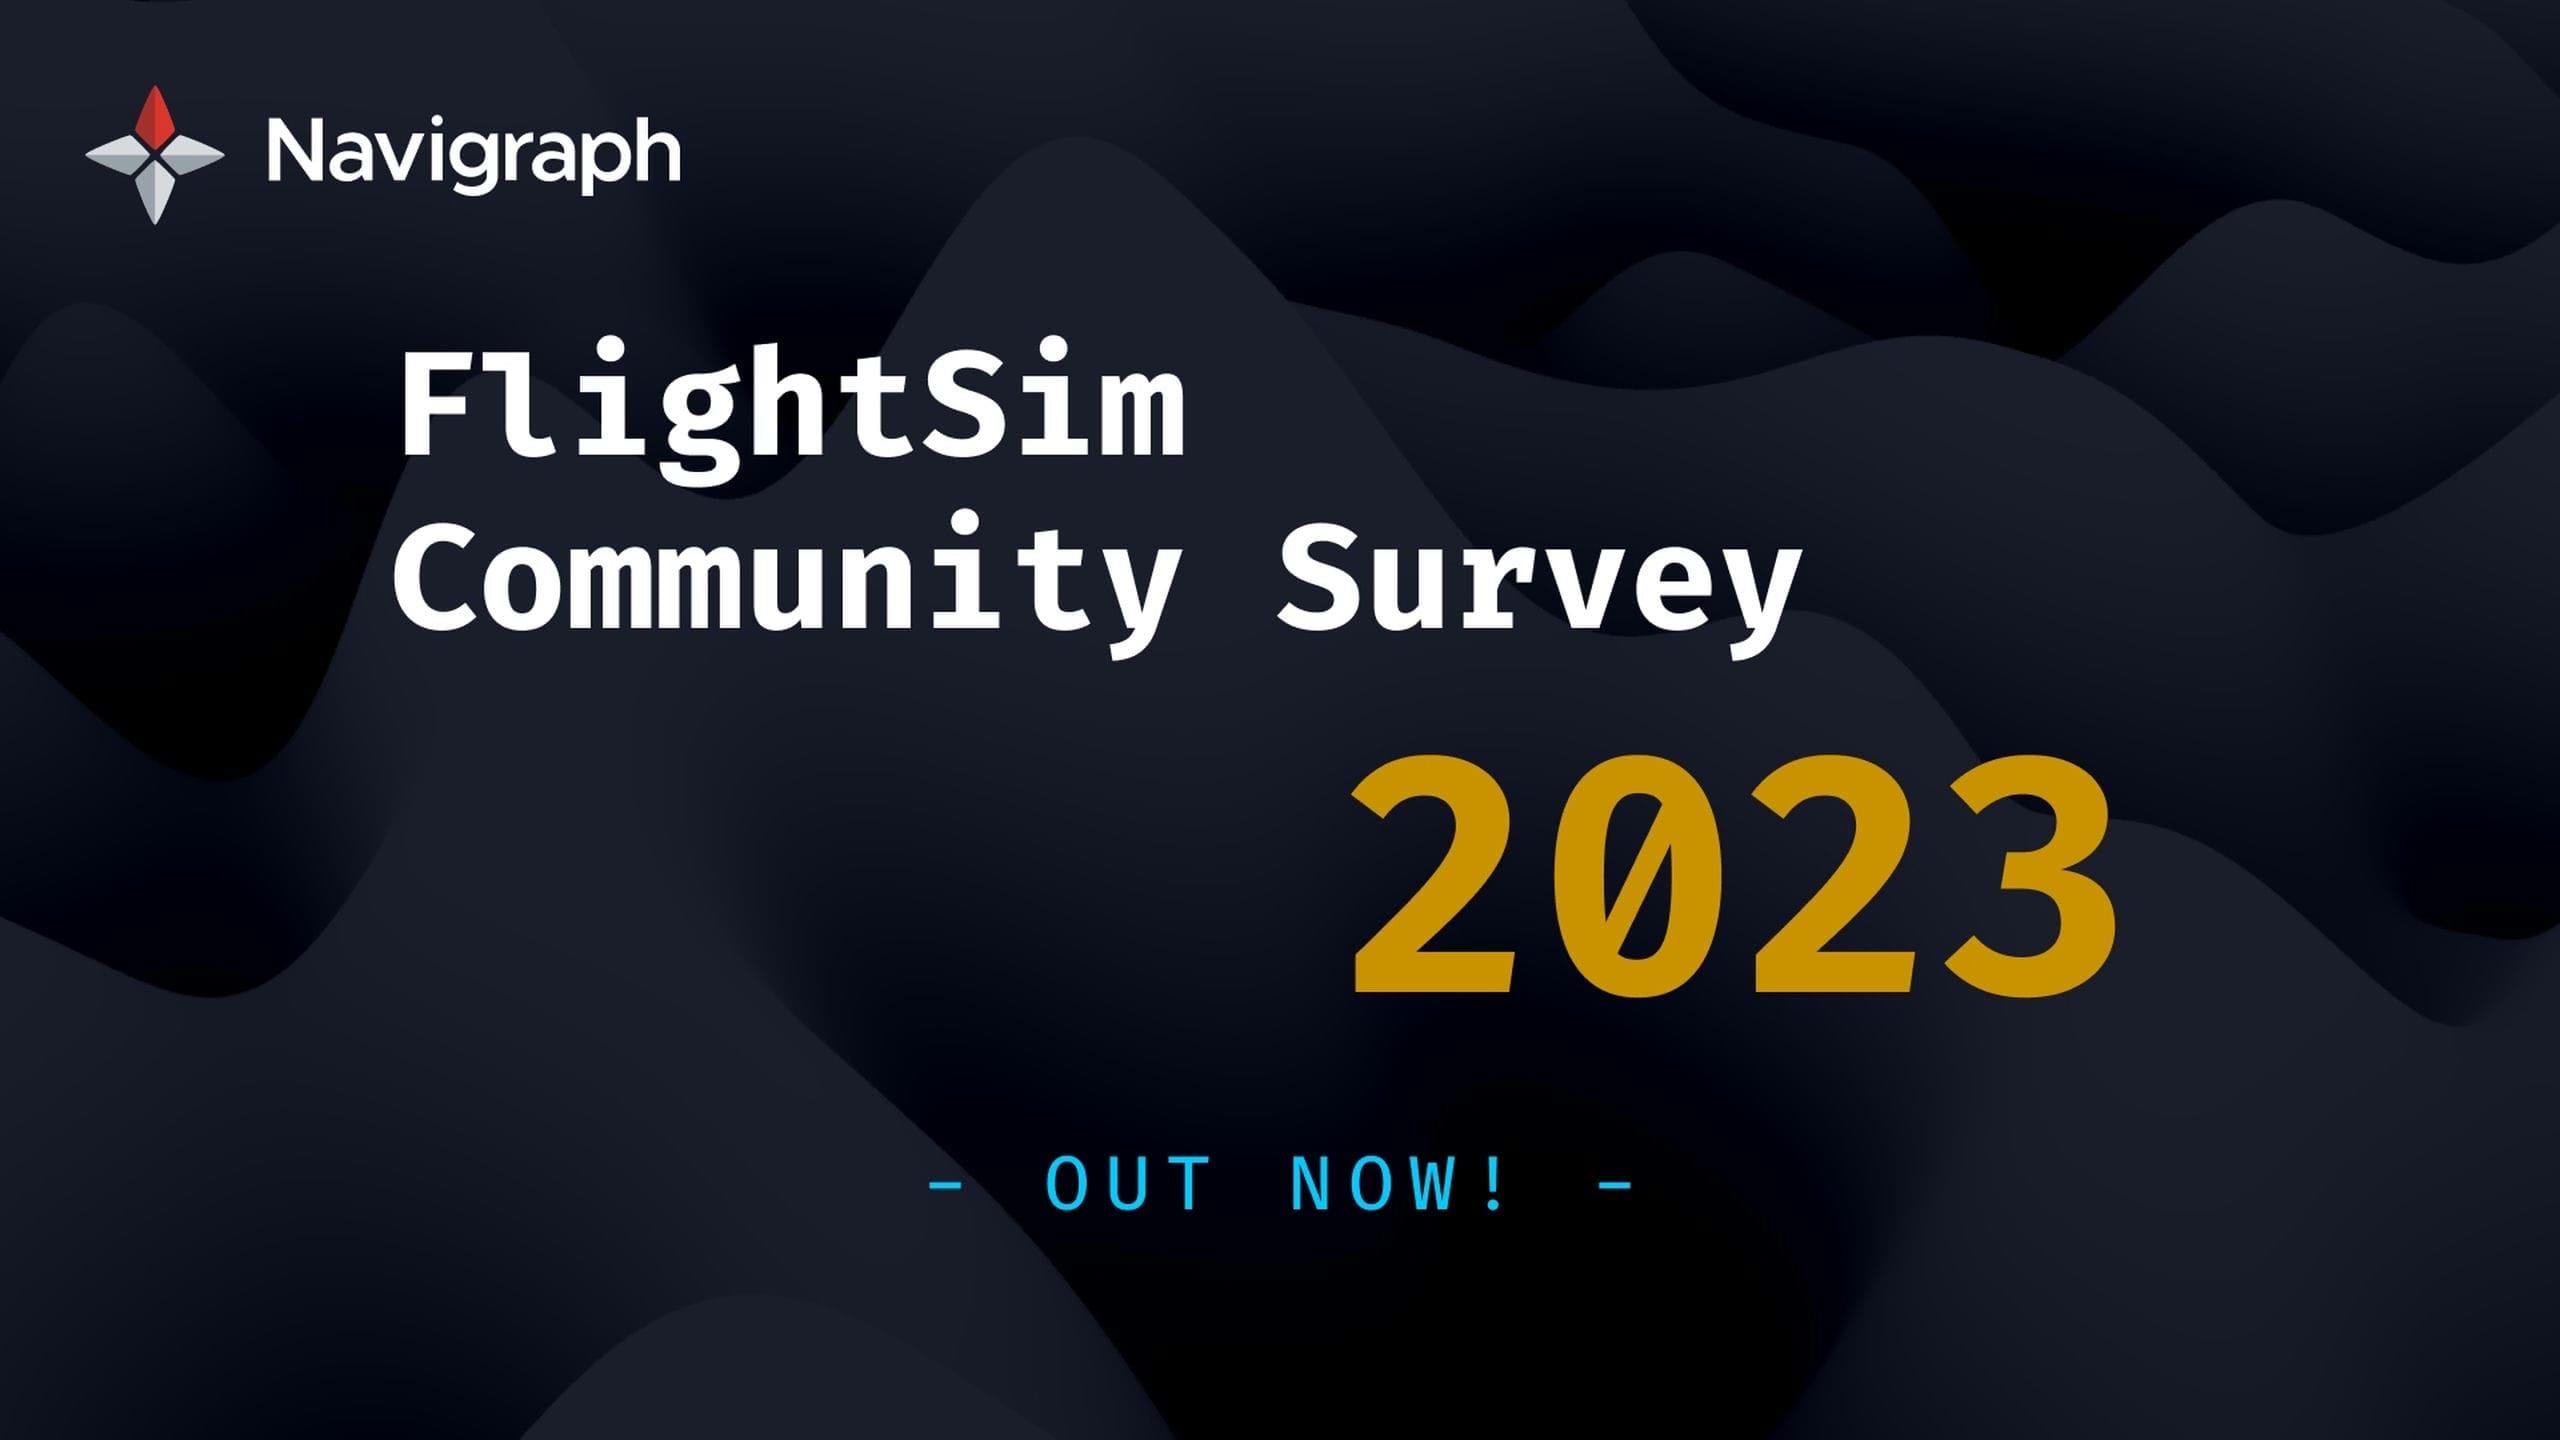 Flightsim Community Survey 2023